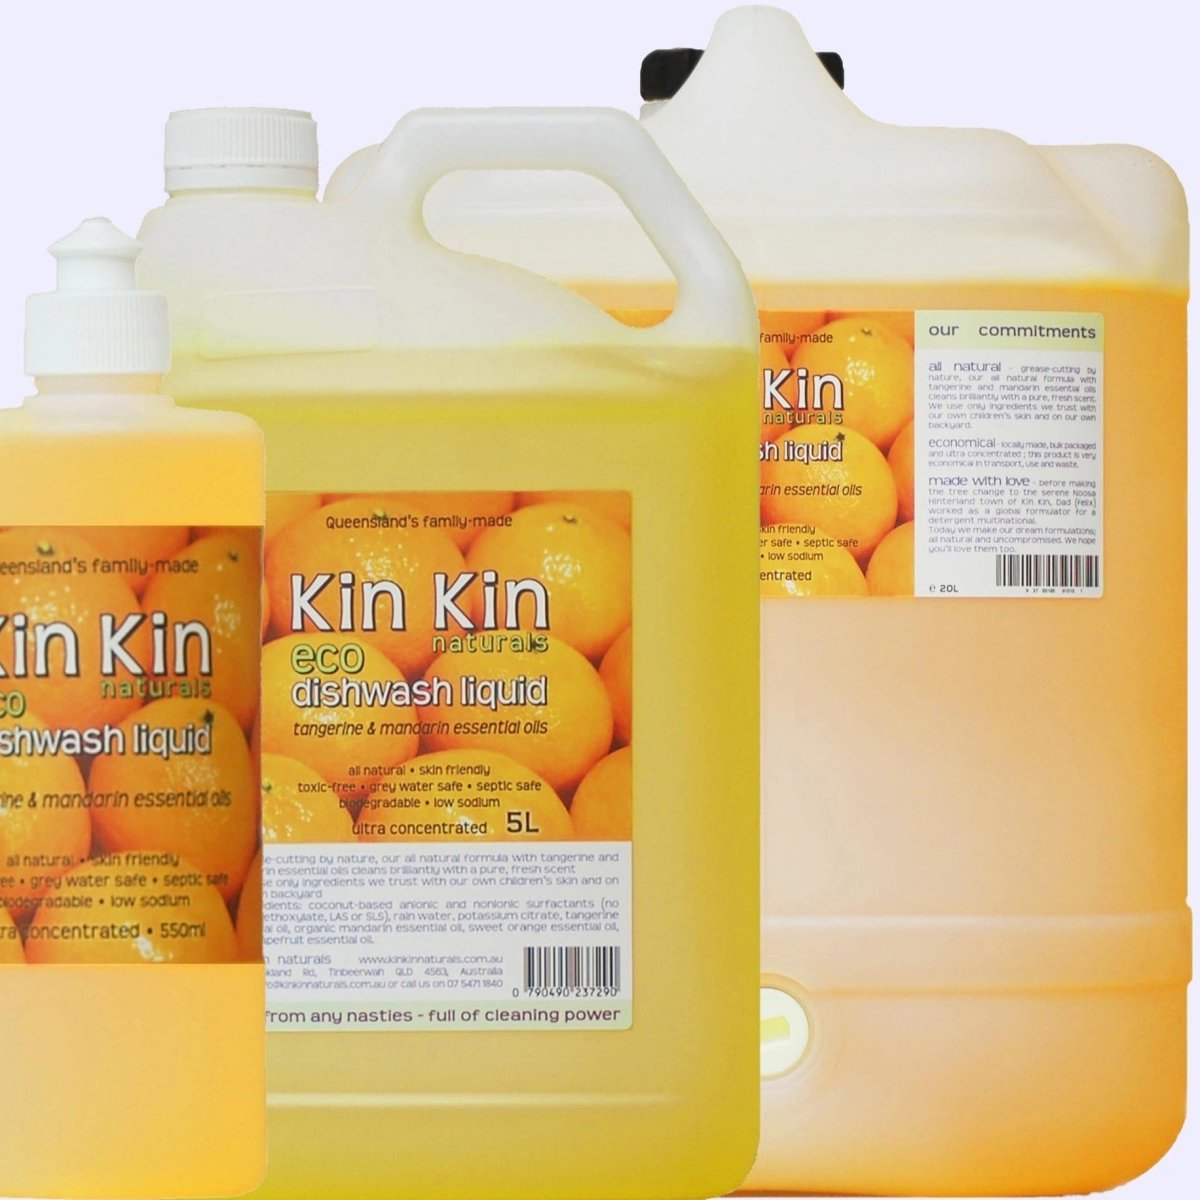 Kin Kin Naturals Dishwashing Liquid Bulk Refill Drums in Tangerine & Mandarin, Urban Revolution.